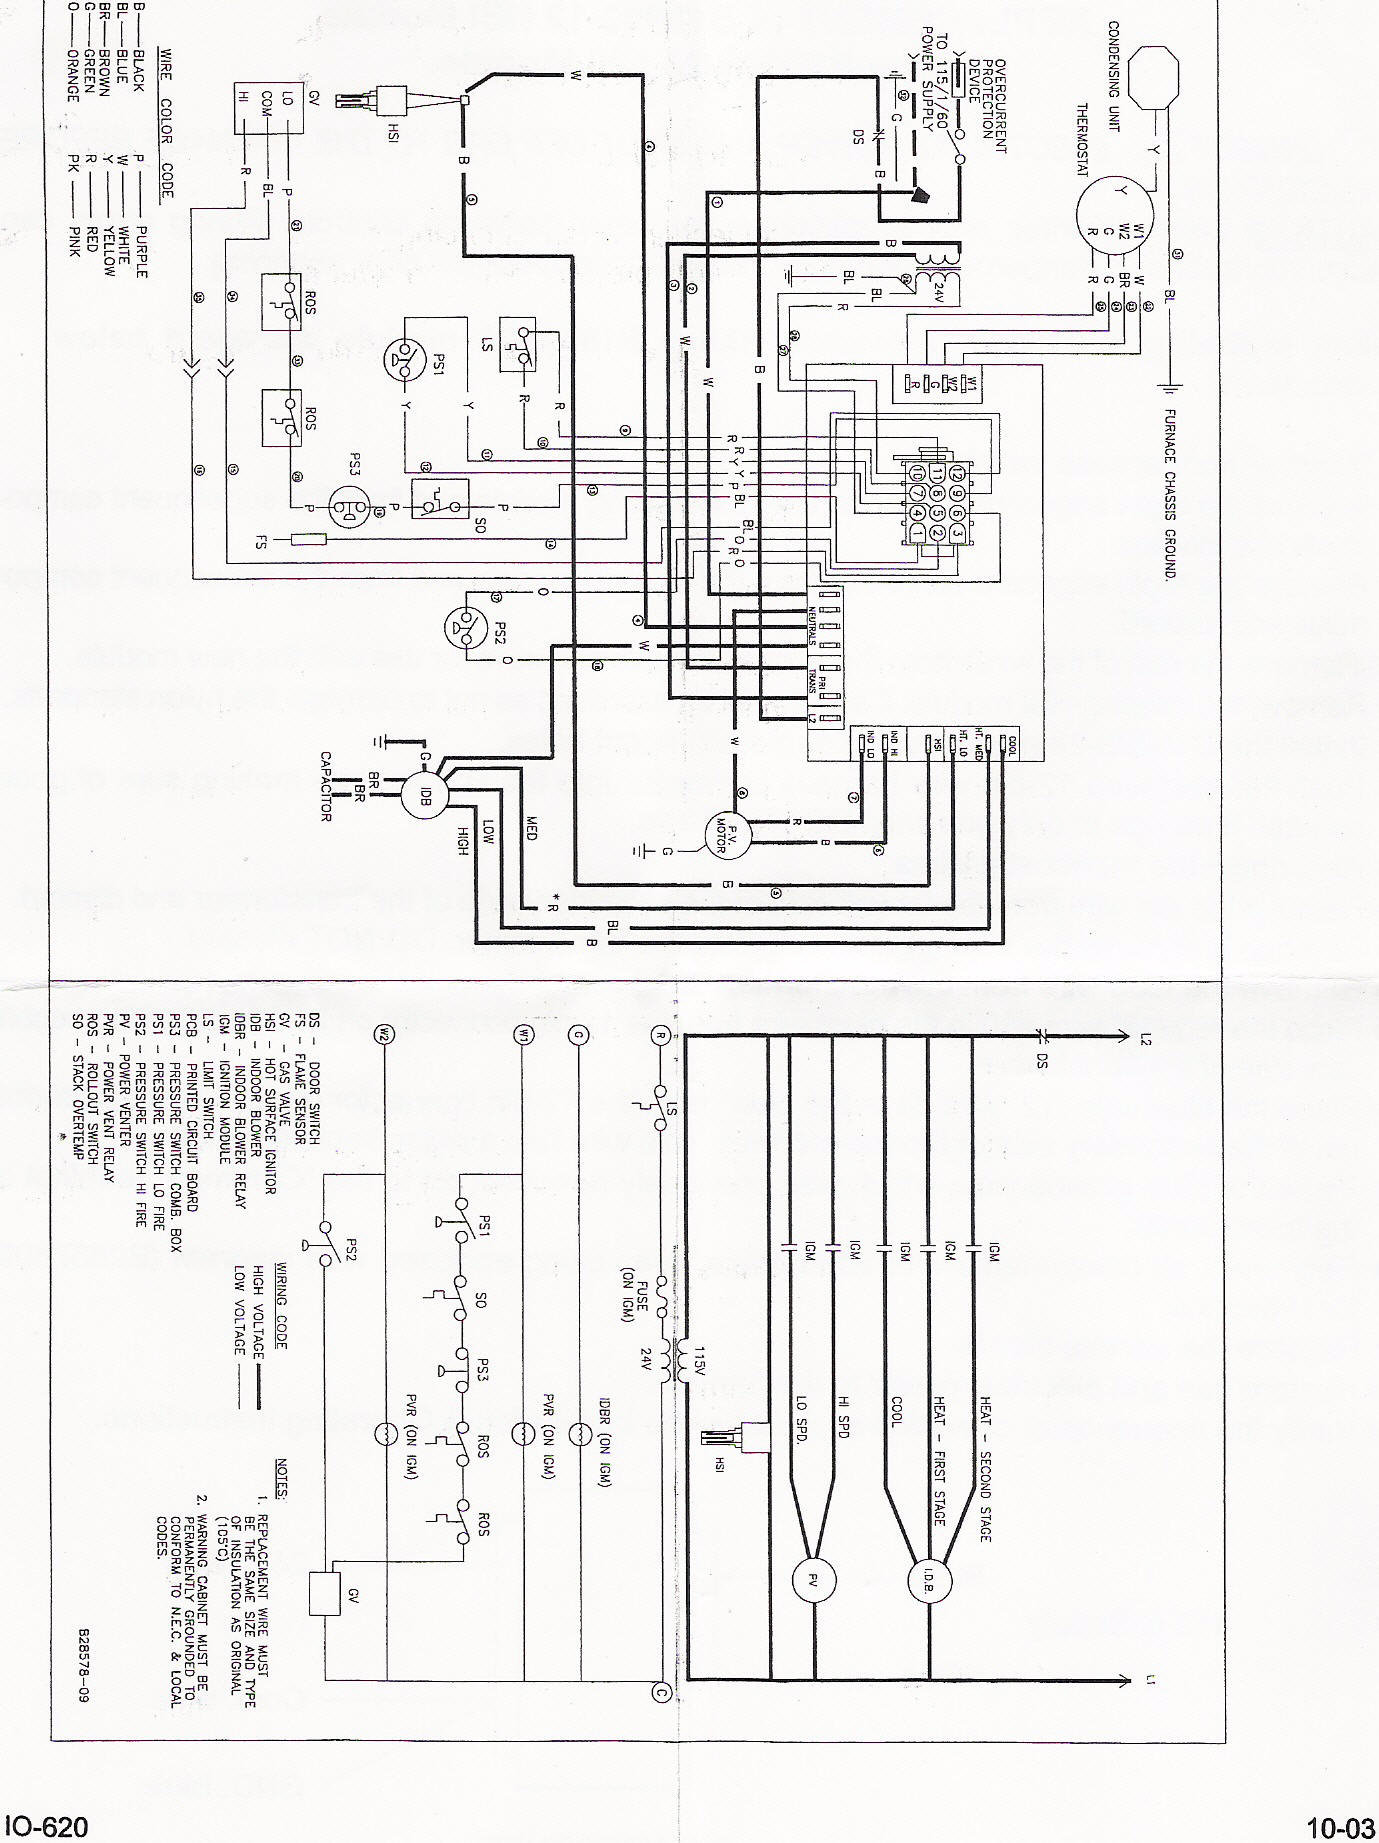 York Air Handler Control Board Wiring Diagram | Wiring Diagram - York Air Handler Wiring Diagram